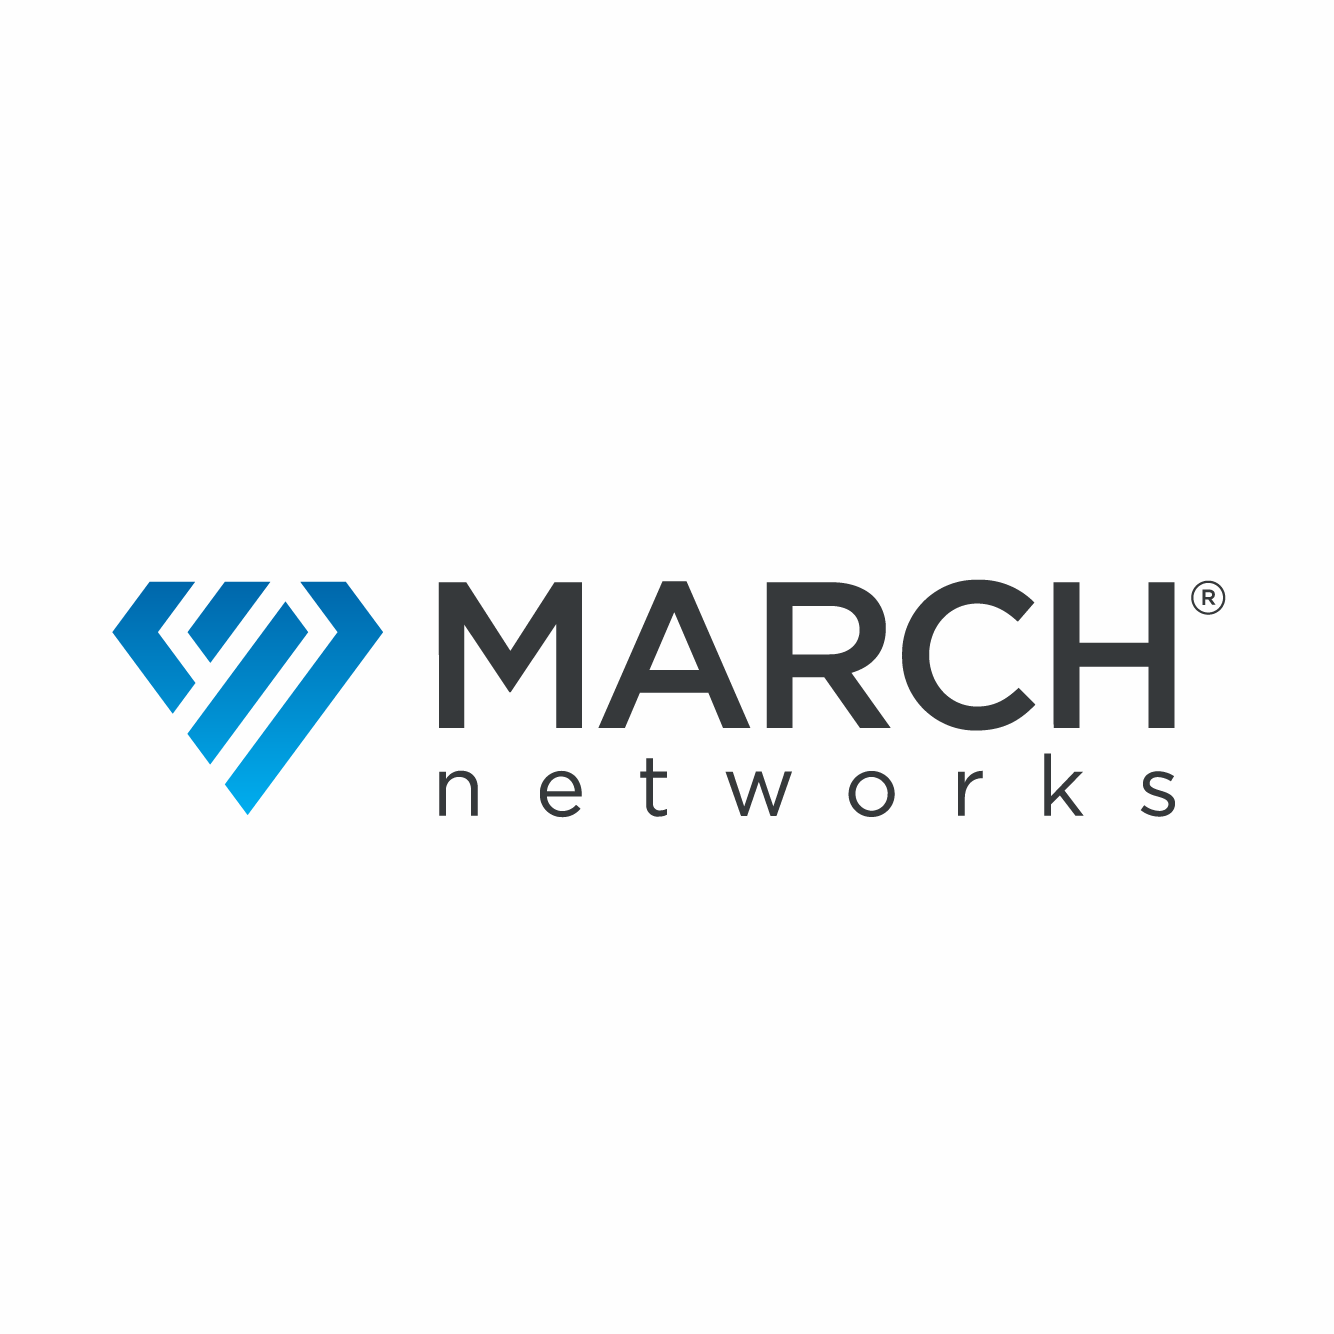 https://securetech.local/wp-content/uploads/2019/04/66.png